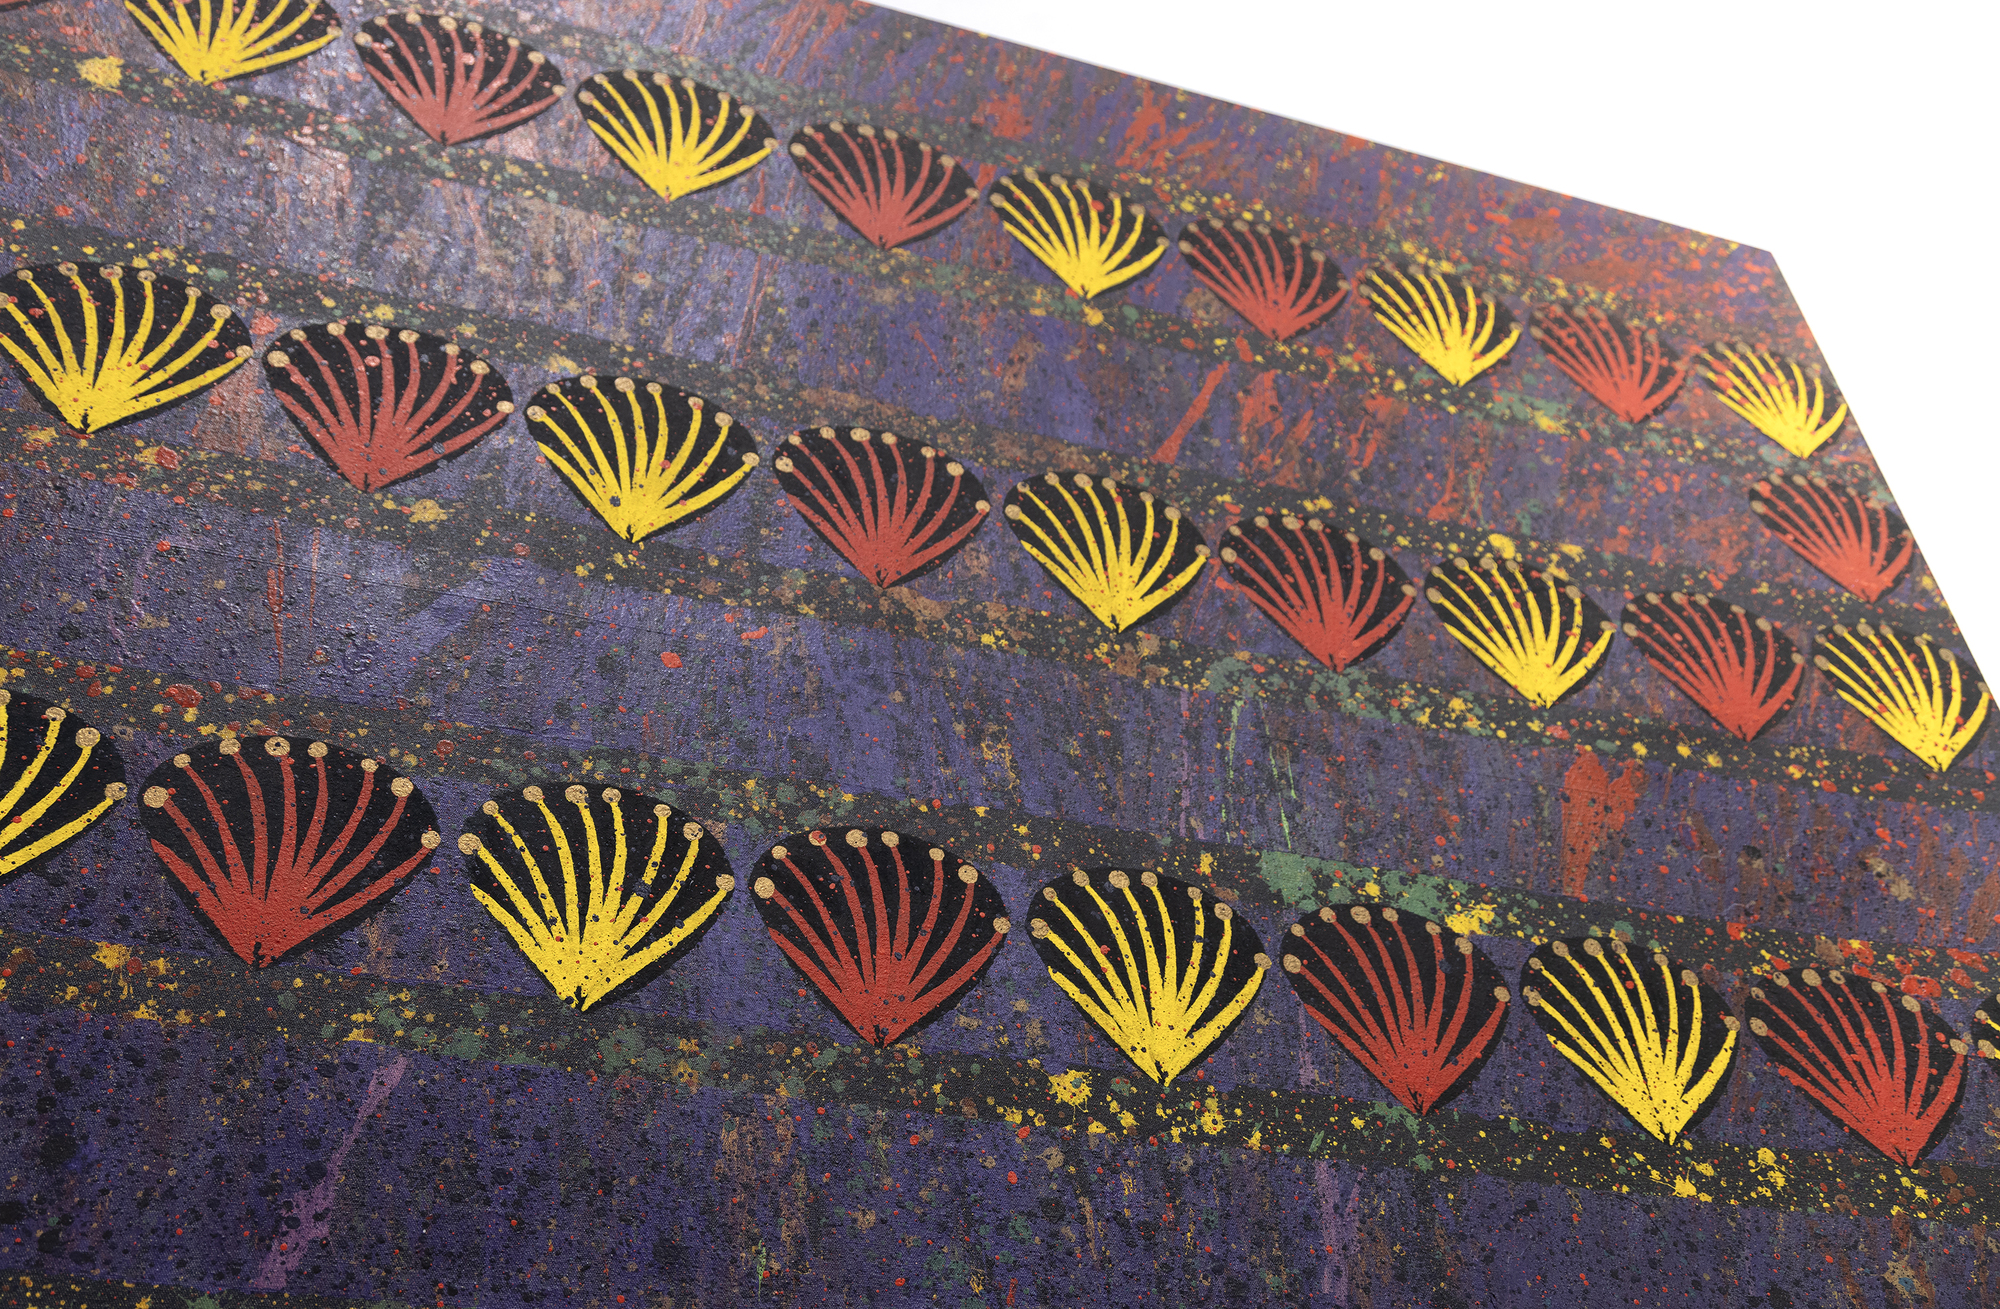 MERION ESTES - Solo Samba - acrylique sur toile - 70 1/4 x 71 1/2 in.